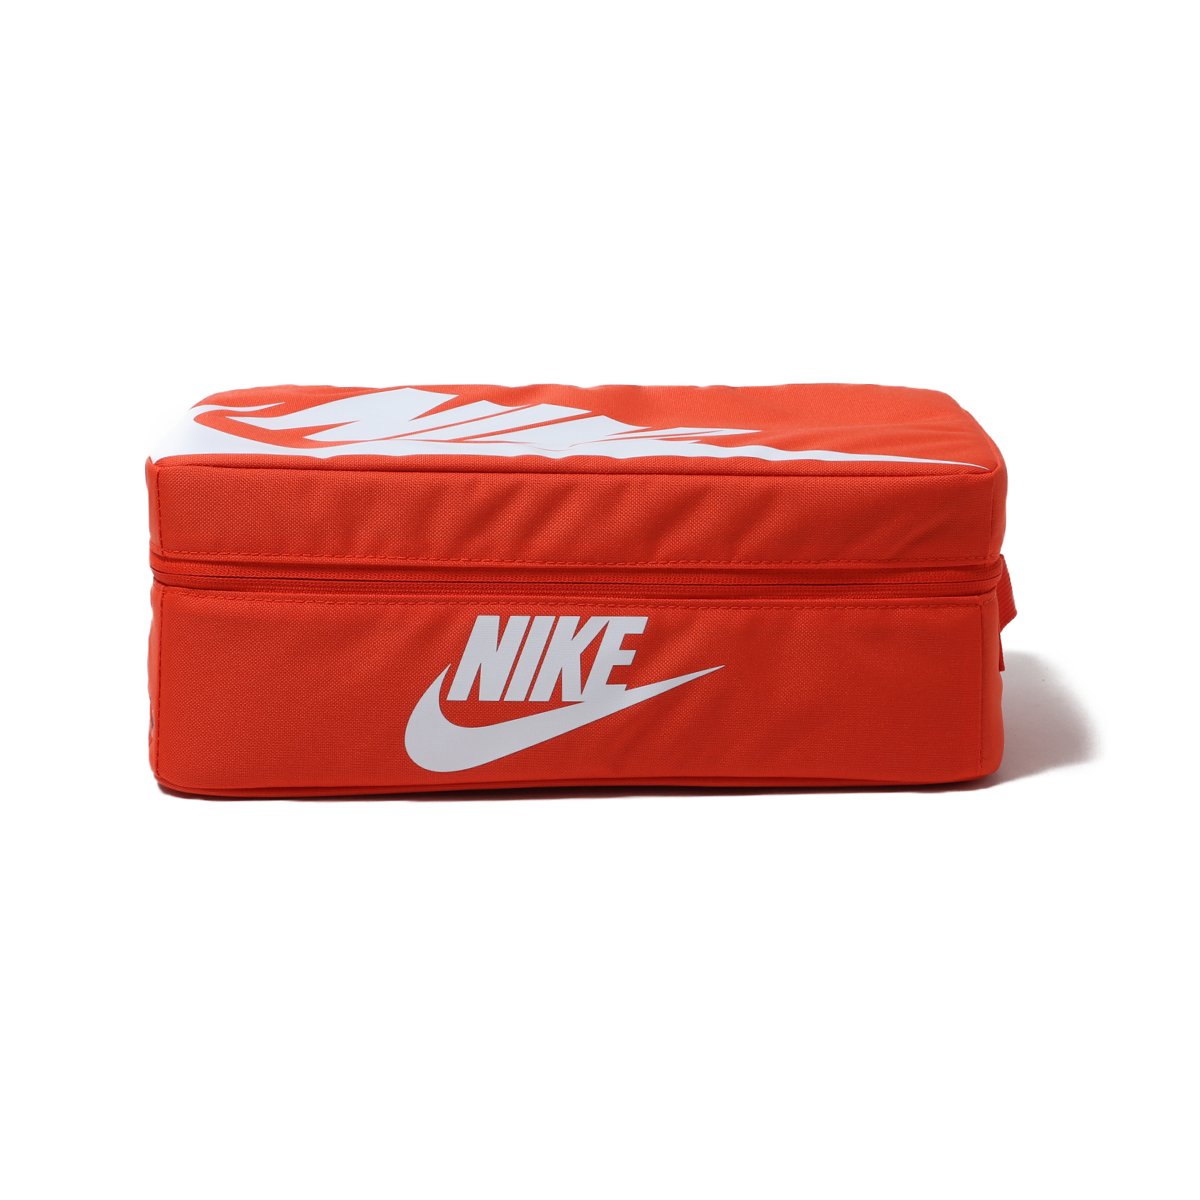 nike orange nylon shoe box bag